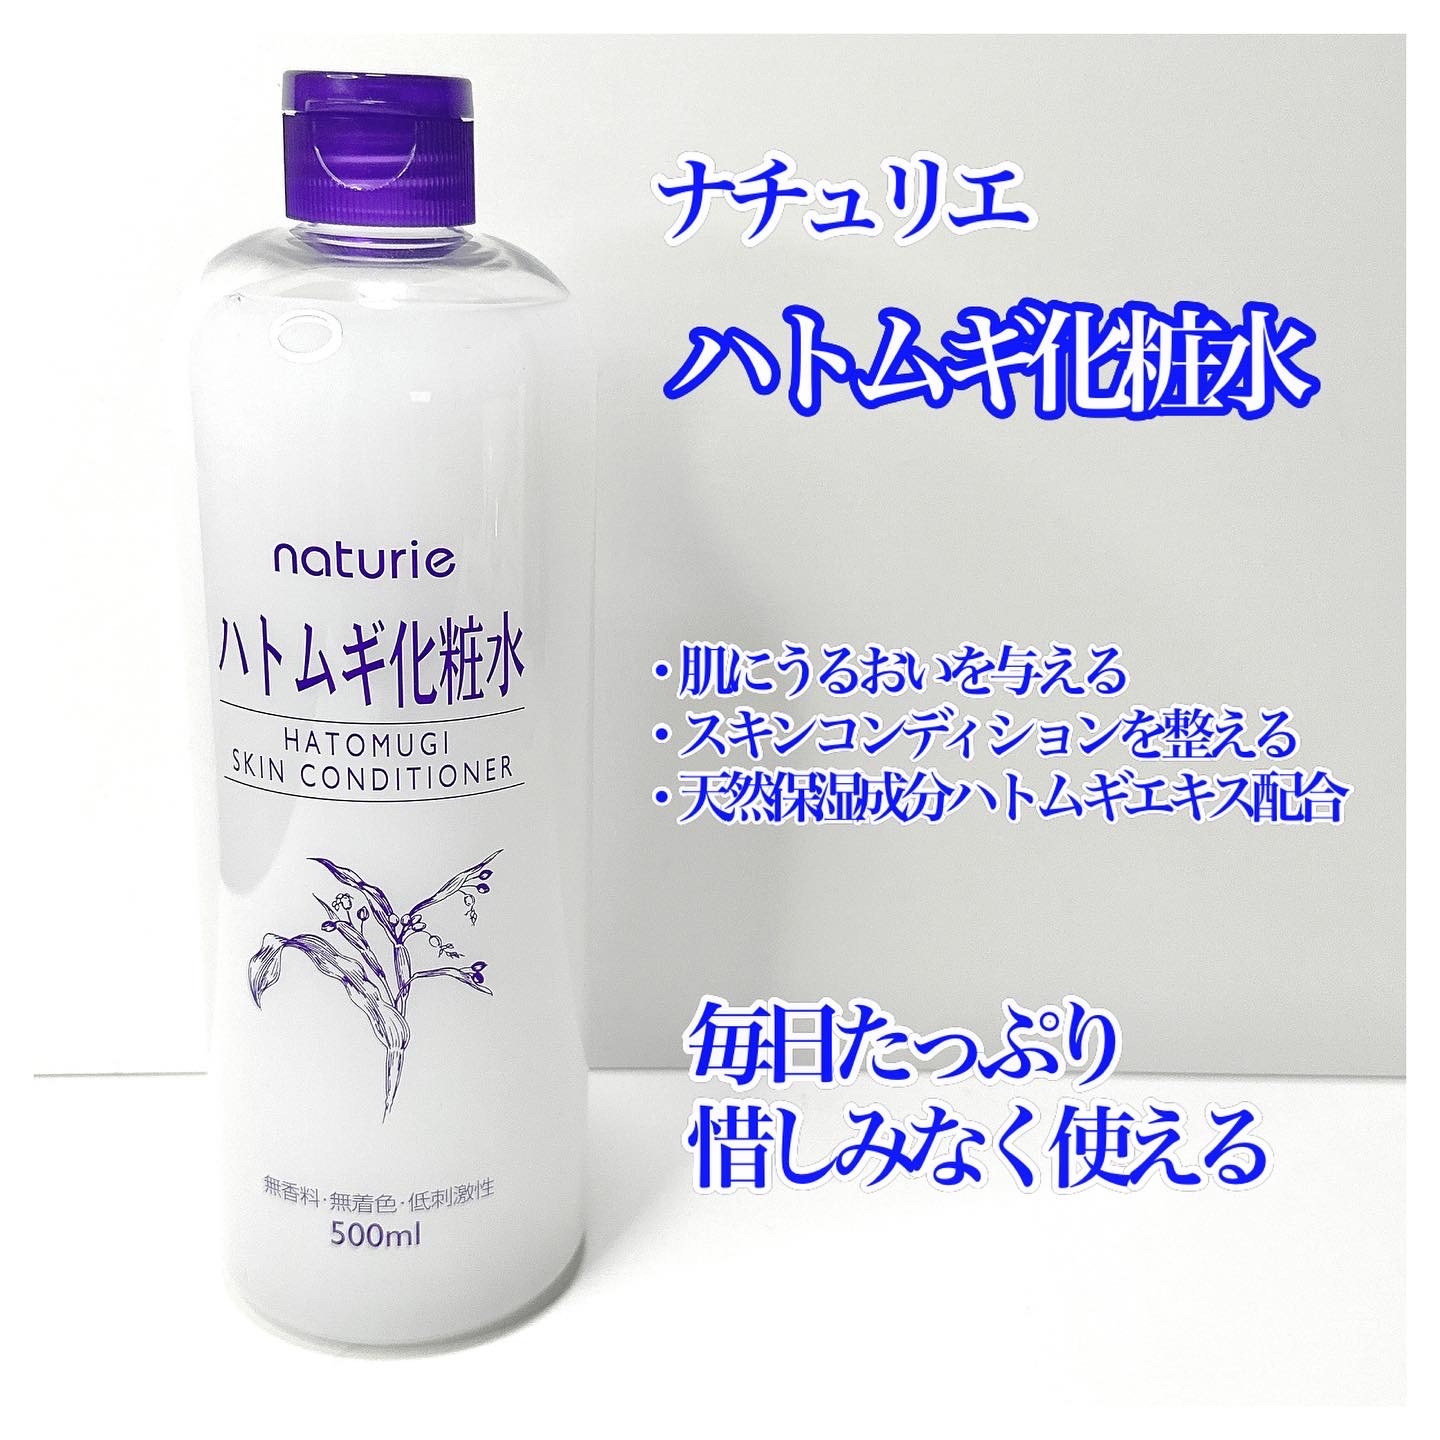 naturie(ナチュリエ) ハトムギ化粧水の良い点・メリットに関するkana_cafe_timeさんの口コミ画像2